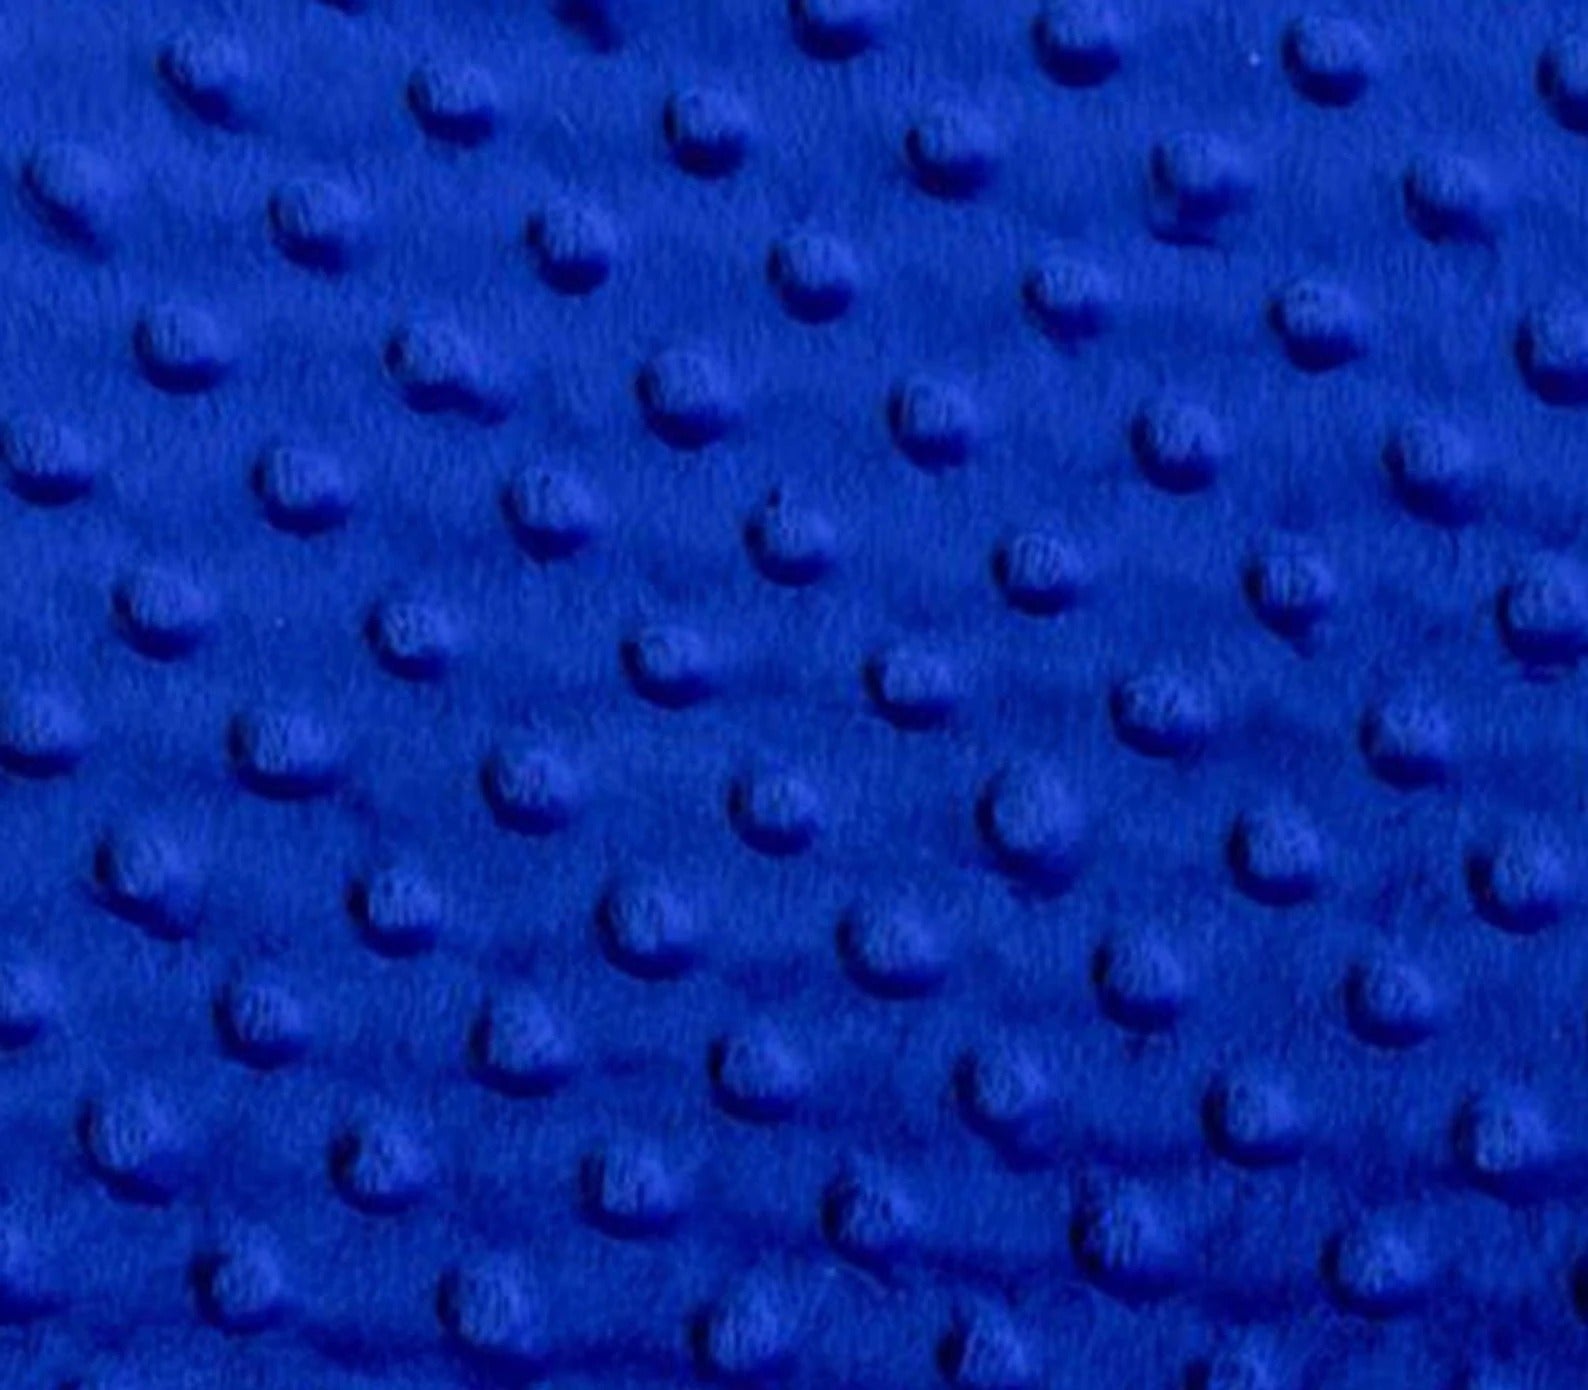 Bubble Polka Dot Minky Fabric By The Roll (20 Yards) Wholesale FabricMinkyICEFABRICICE FABRICSRoyal BlueBy The Roll (60" Wide)Bubble Polka Dot Minky Fabric By The Roll (20 Yards) Wholesale Fabric ICEFABRIC Royal Blue